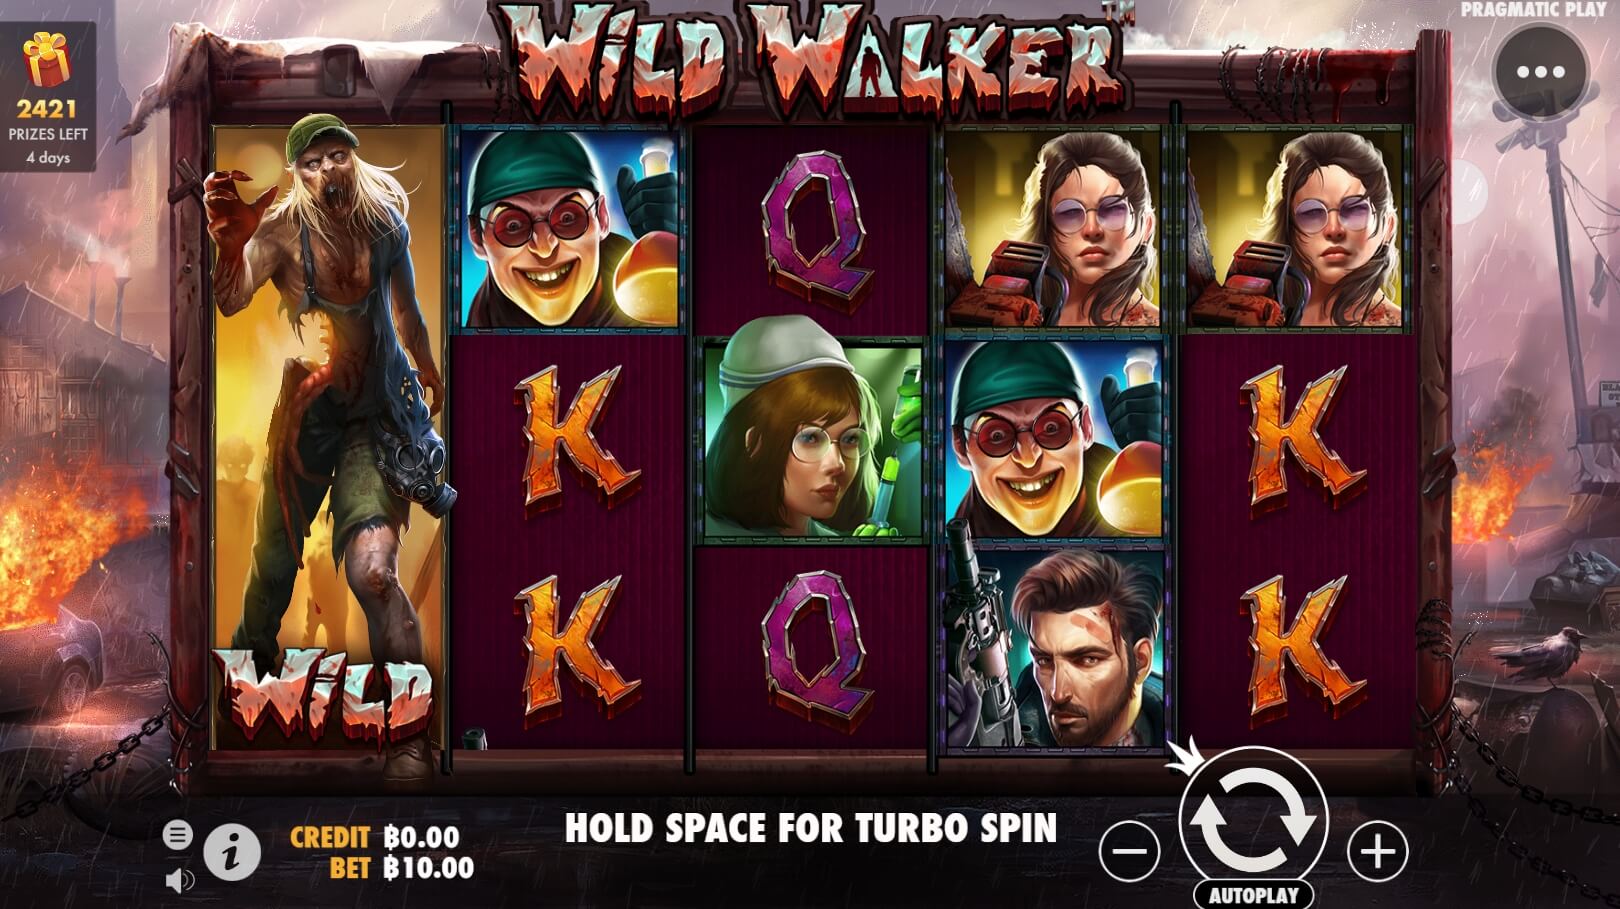 Wild Walker Pragmatic Play joker slot